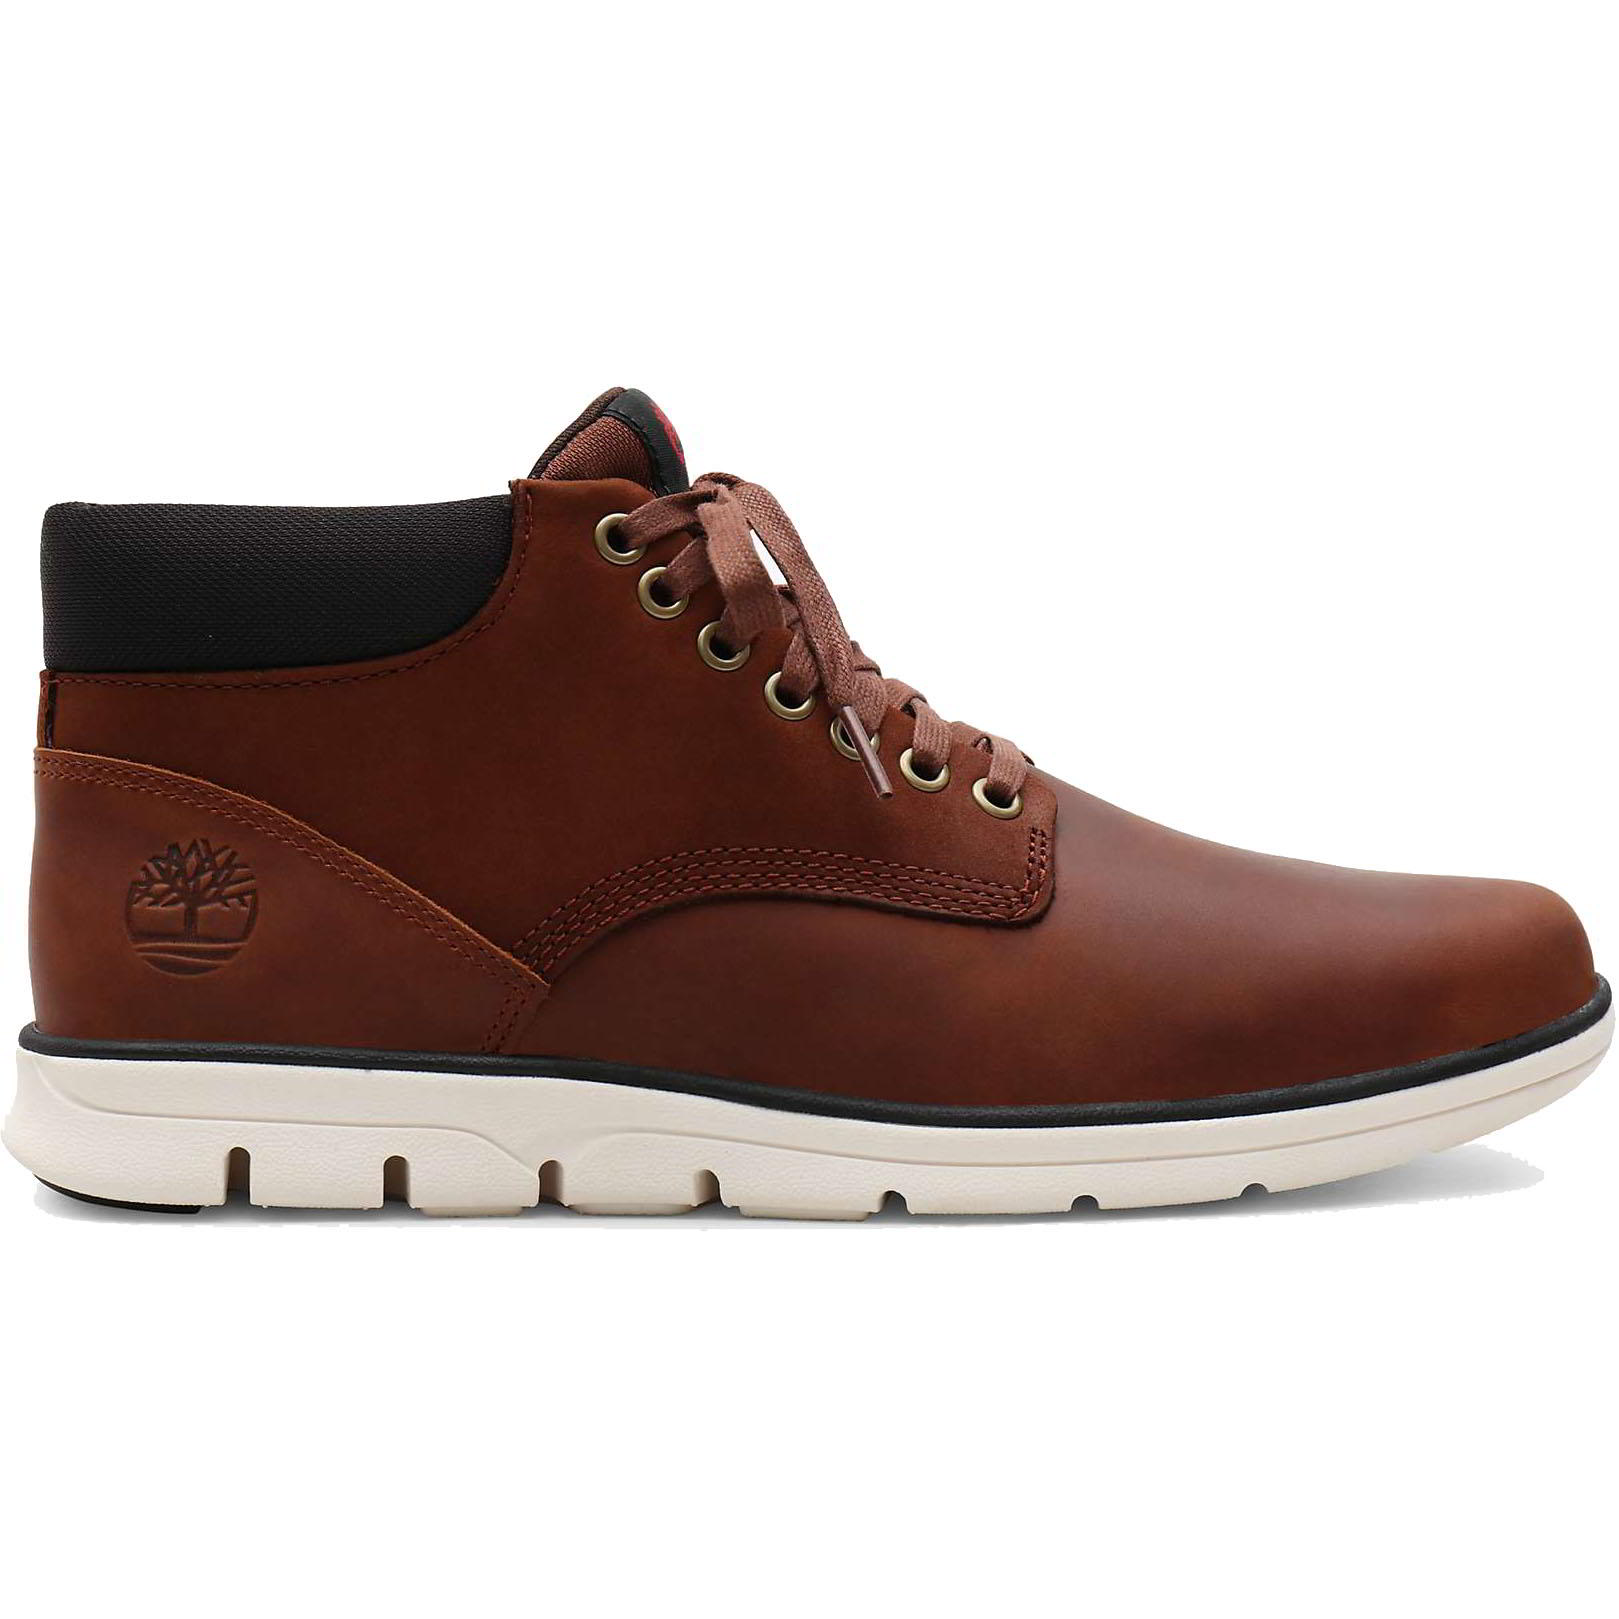 Timberland Men's Bradstreet Chukka Leather Ankle Boots - UK 7.5